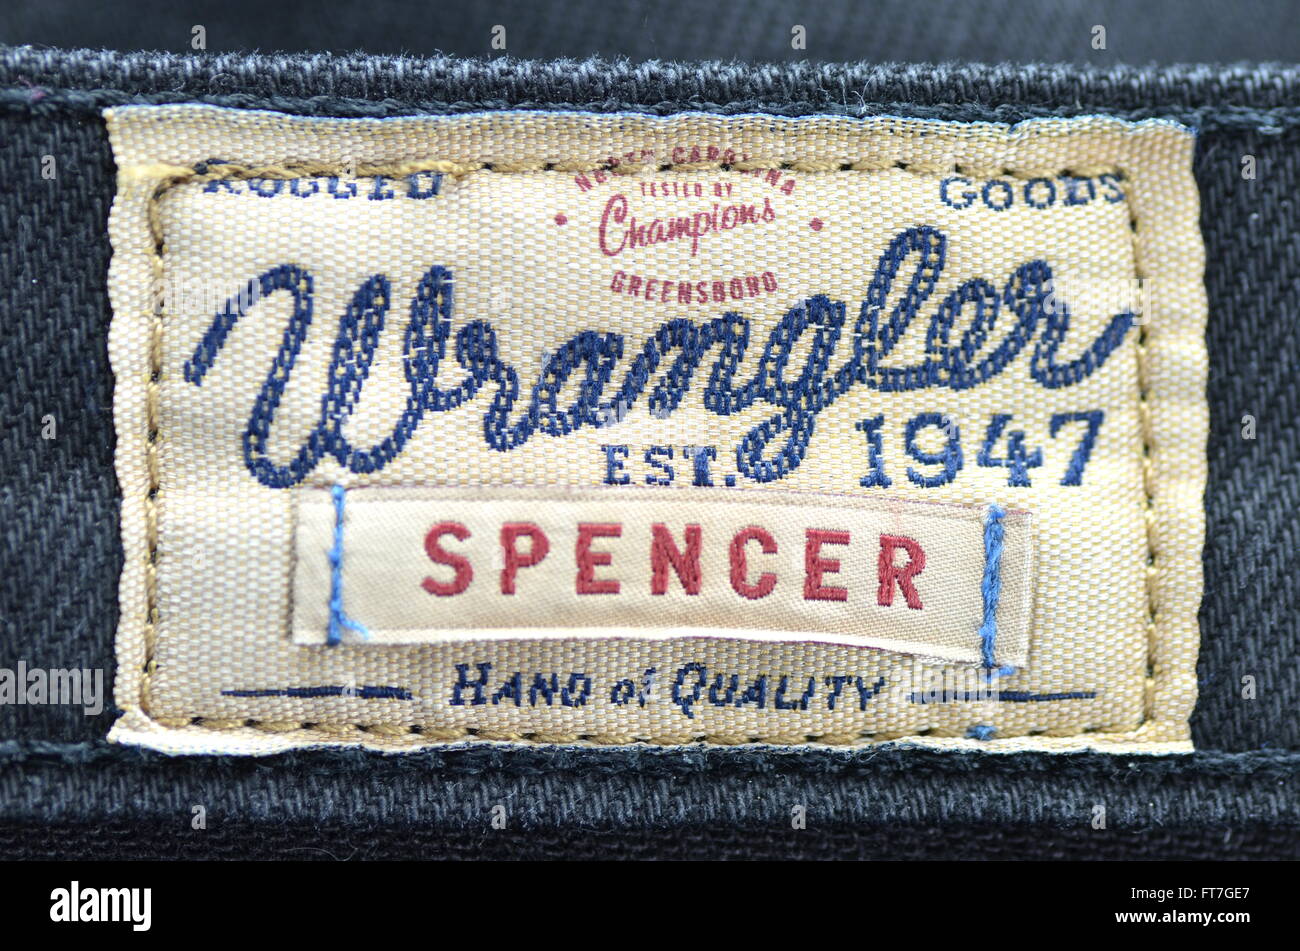 Closeup of Wrangler label on blue jeans Stock Photo - Alamy